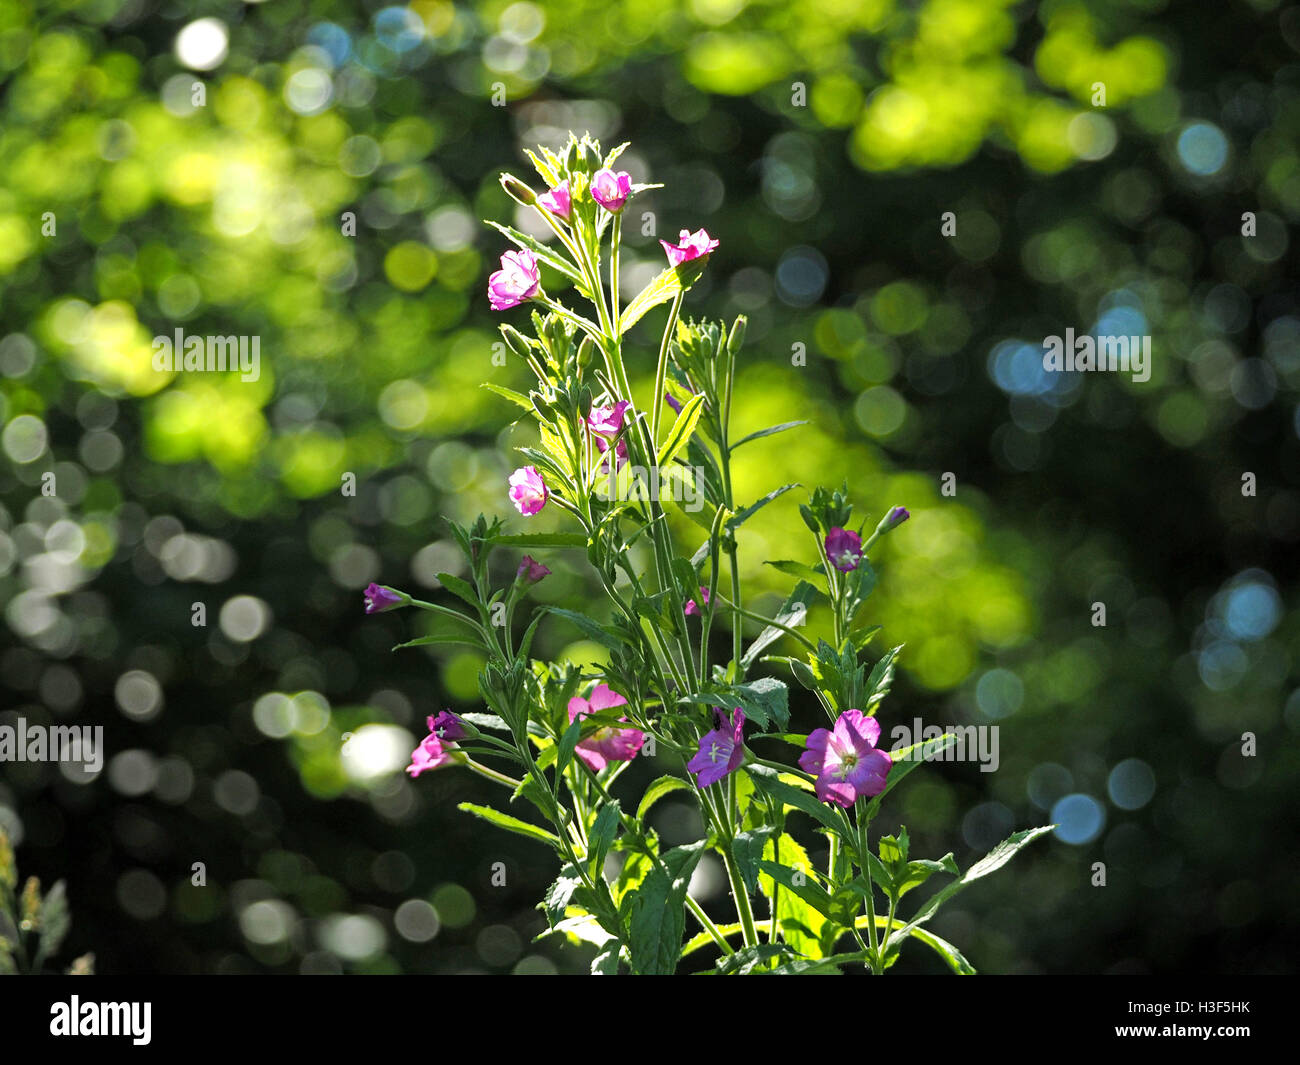 rosebay willowherb flowering in sunshine with defocussed verdant background Stock Photo